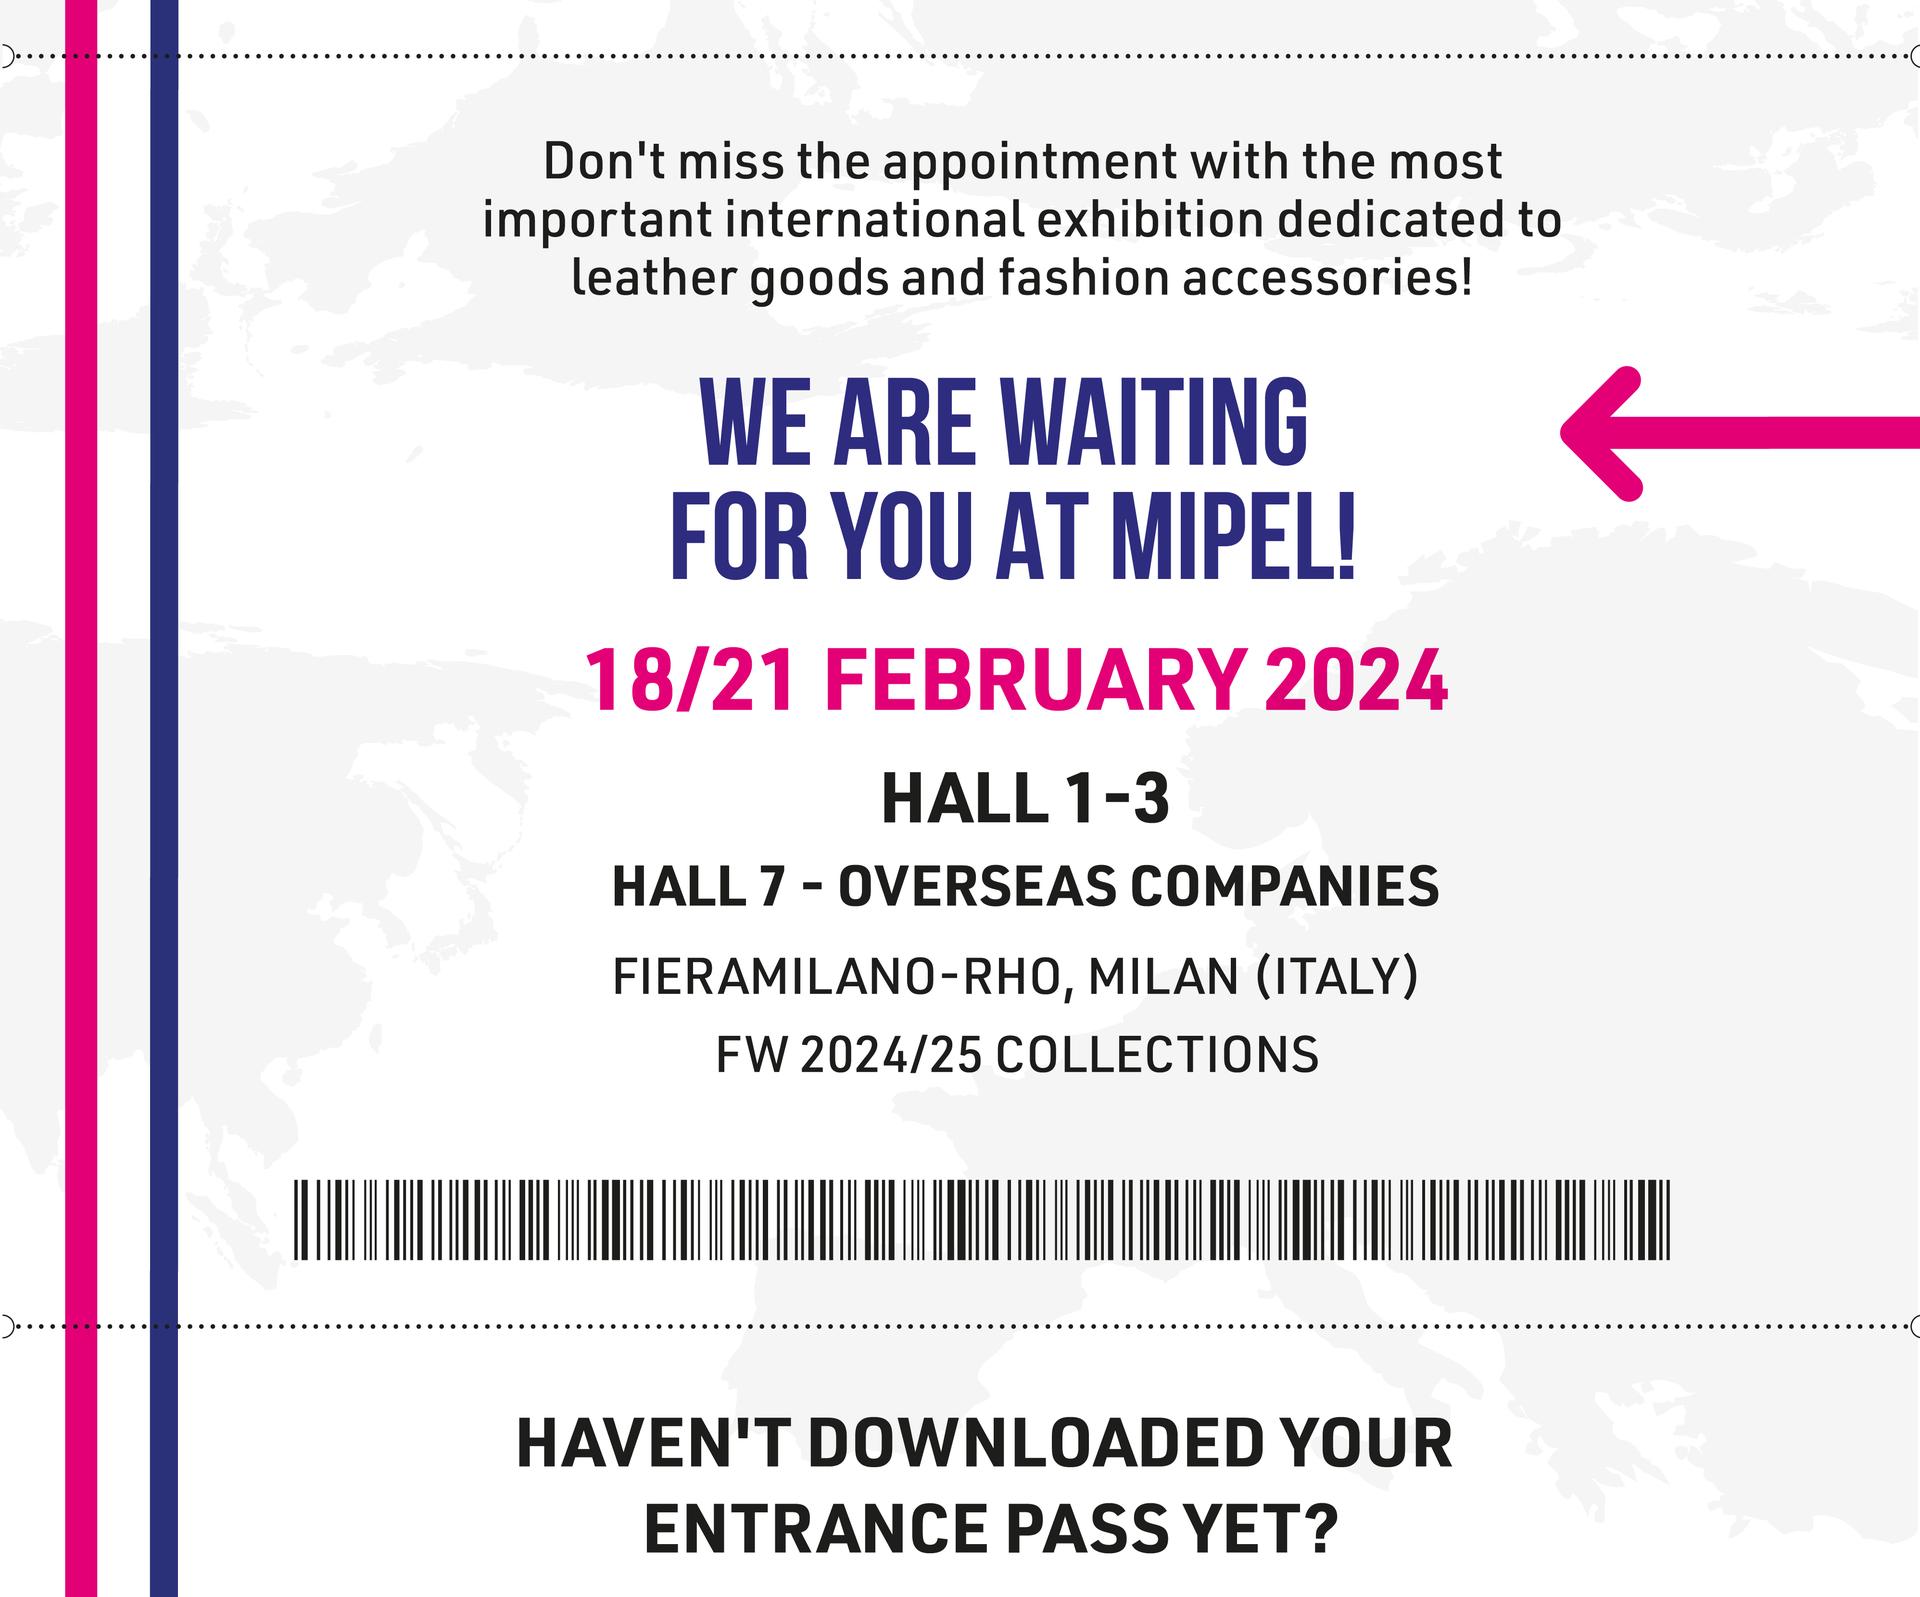 MIPEL125 | FEBRUARY 18/21, 2024 | FW 2024/25 COLLECTIONS | FIERAMILANO-RHO, MILAN, ITALY.